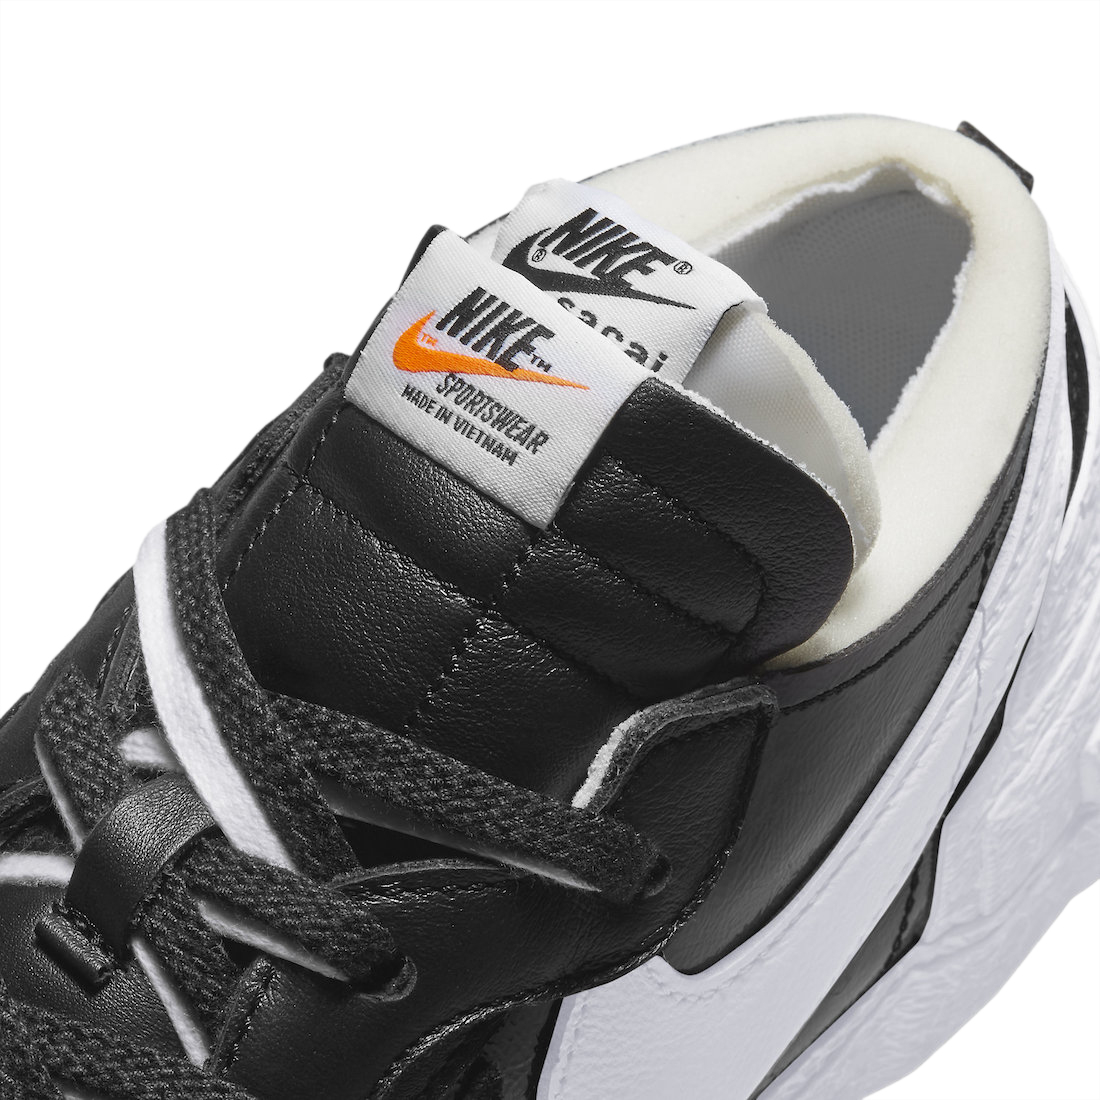 sacai x Nike Blazer Low Black Patent DM6443-001 - KicksOnFire.com